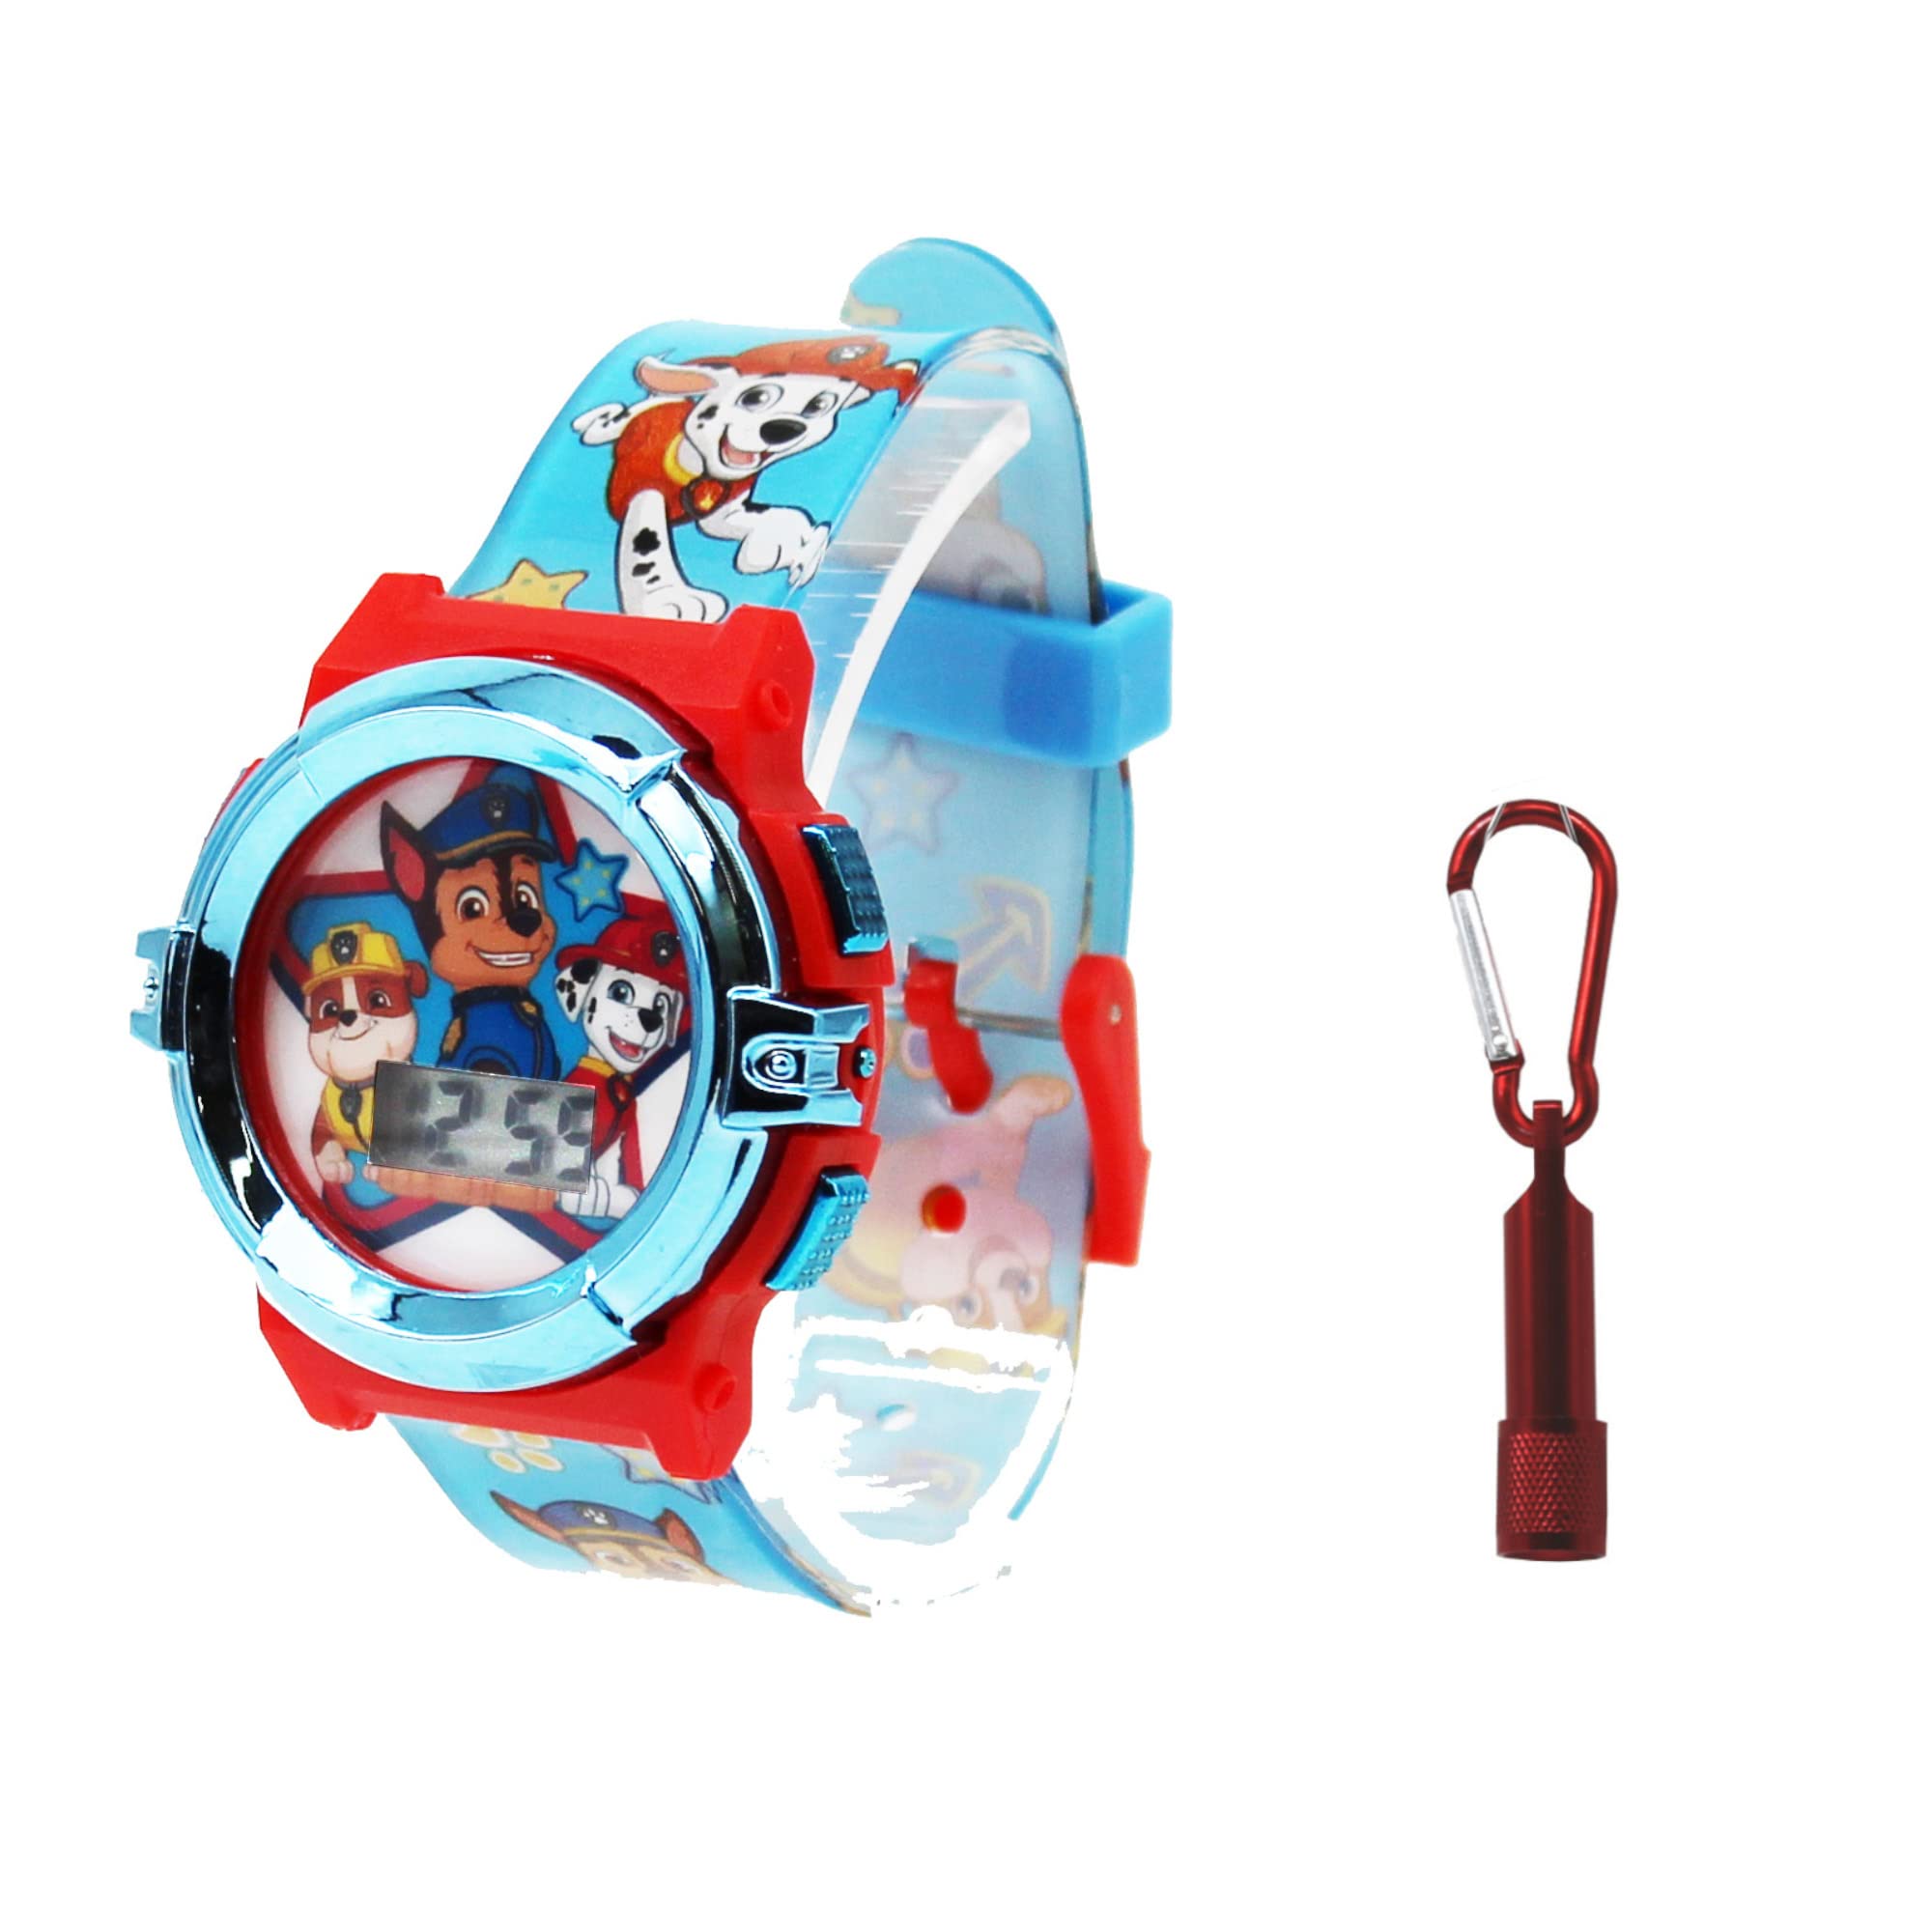 Accutime Kids Nickelodeon Paw Patrol Red & Blue Digital Flashing LCD Quartz Wrist Watch with Flashlight Accessory, Graphic Character Strap for Boys, Girls, Kids (Model: PAW40070AZ)